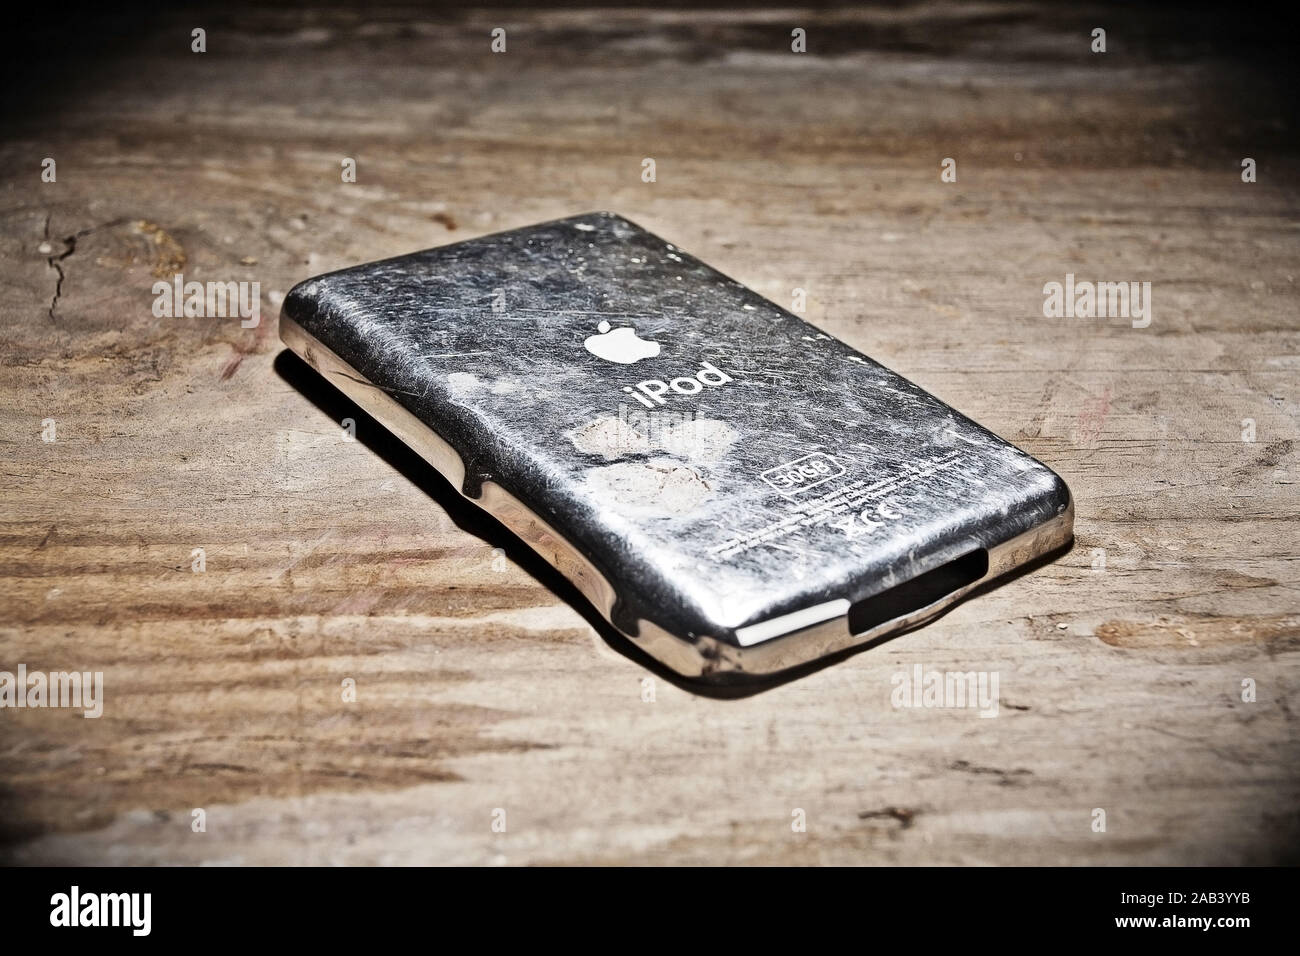 Das defekte Geh‰user'ckteil von einem iPod |La carcasa defectuosa de un iPod| Foto de stock